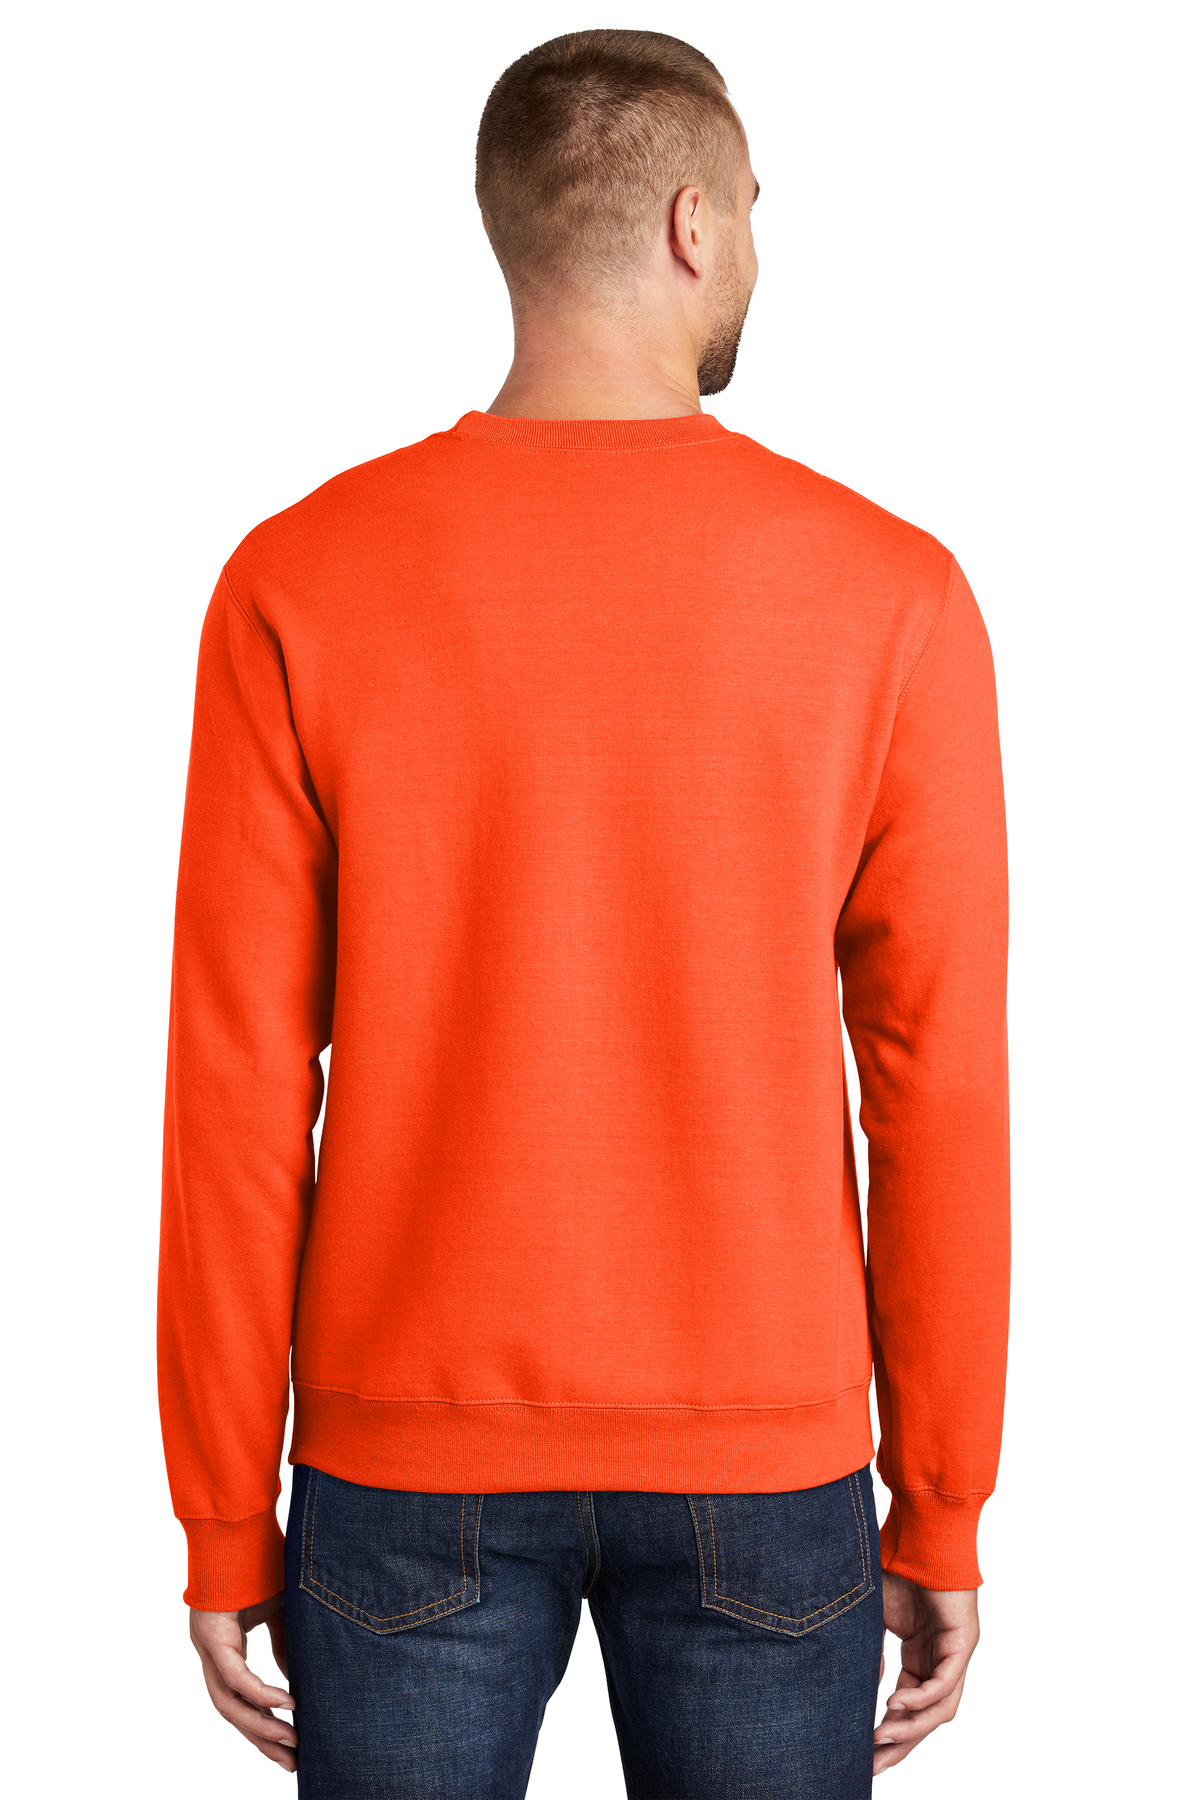 | | Essential Port & Product SanMar Company Crewneck Fleece Sweatshirt